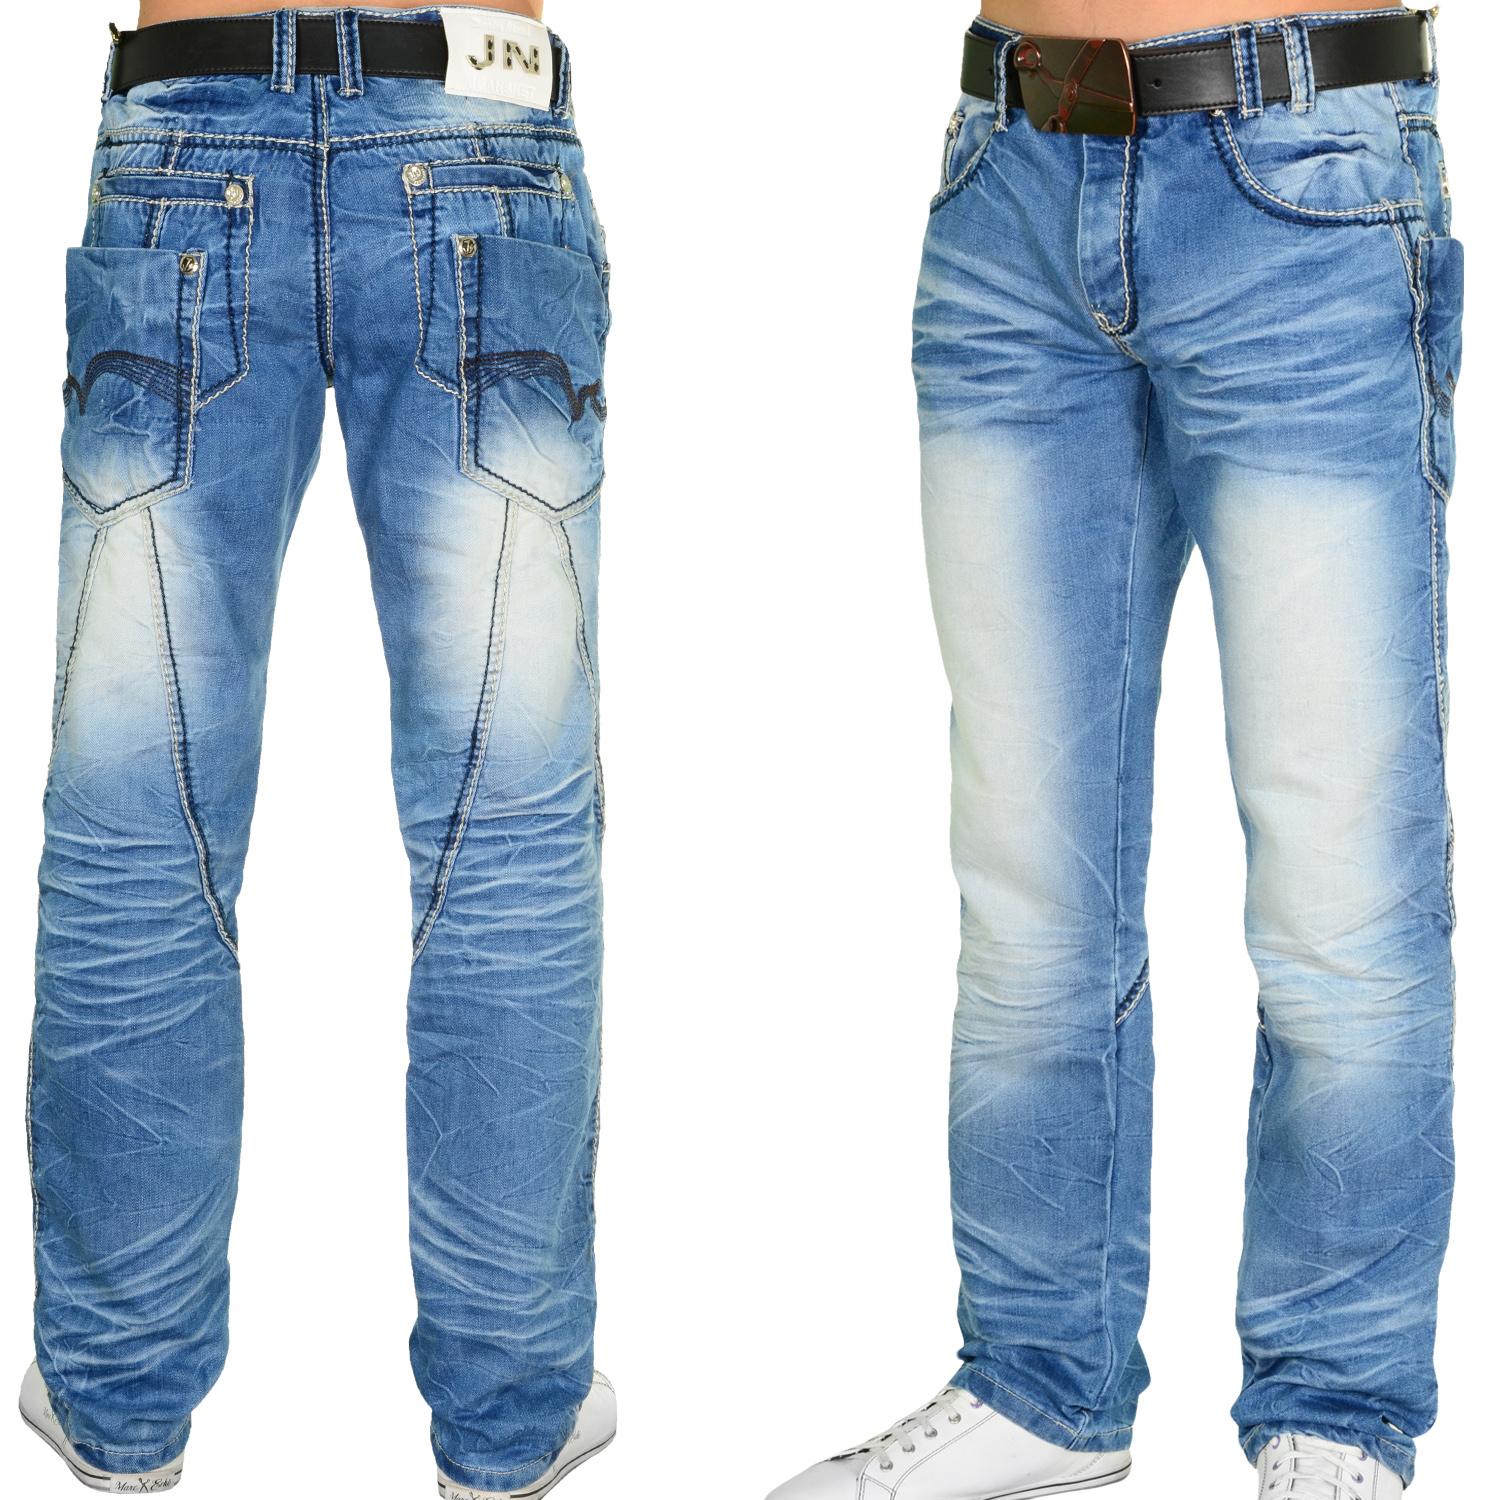 Foto Jeansnet Slim Fit Jeans Azul foto 92314